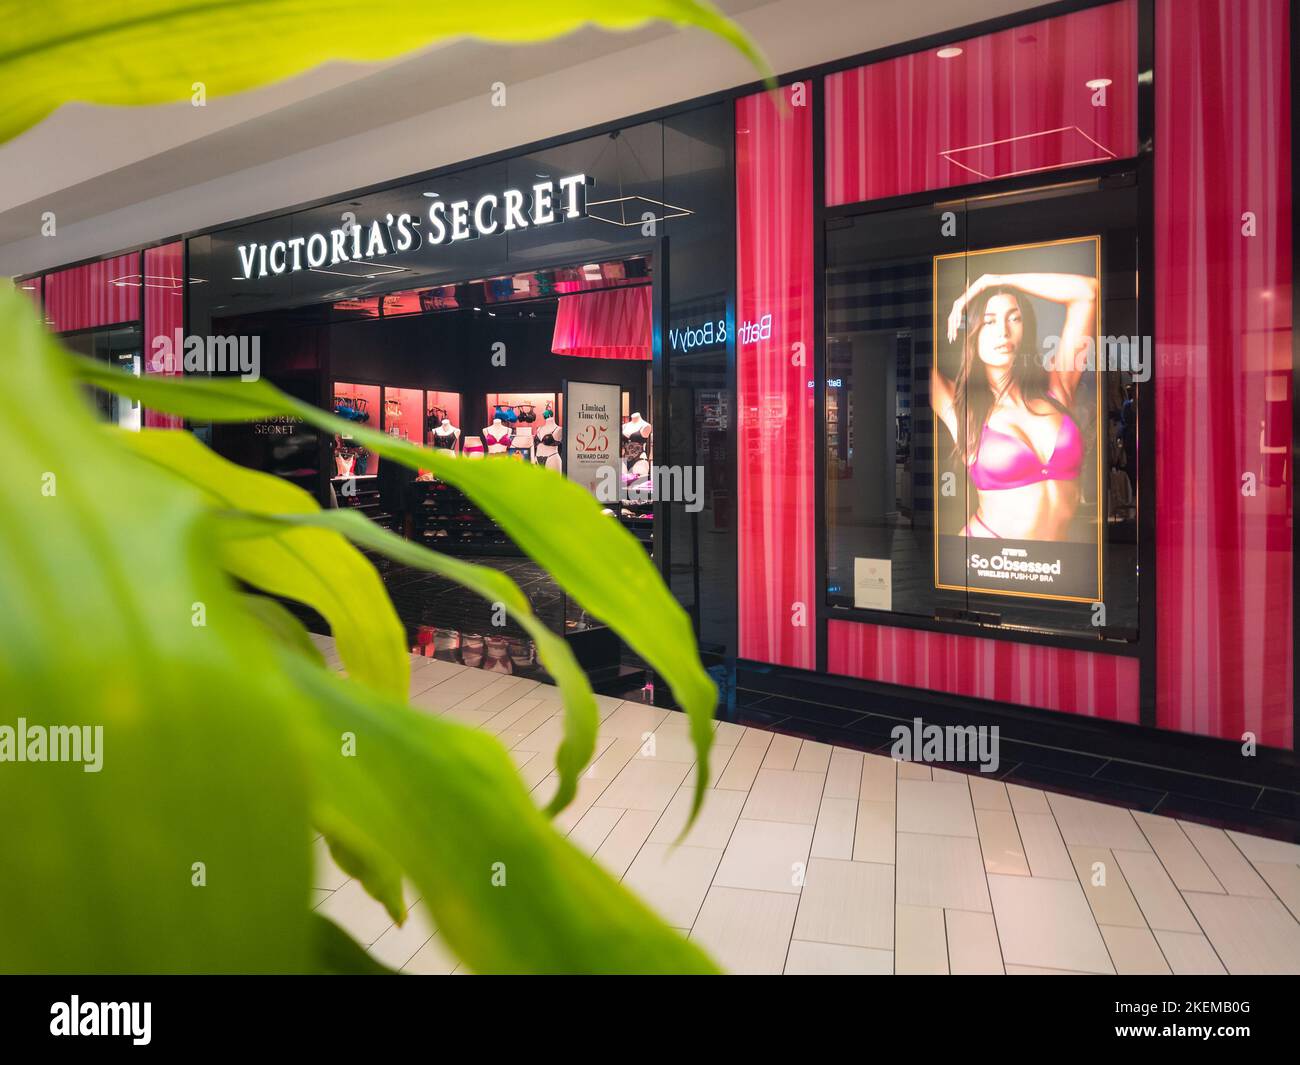 Pink Striped Victorias Secret Shopping Bag Stock Photo - Download